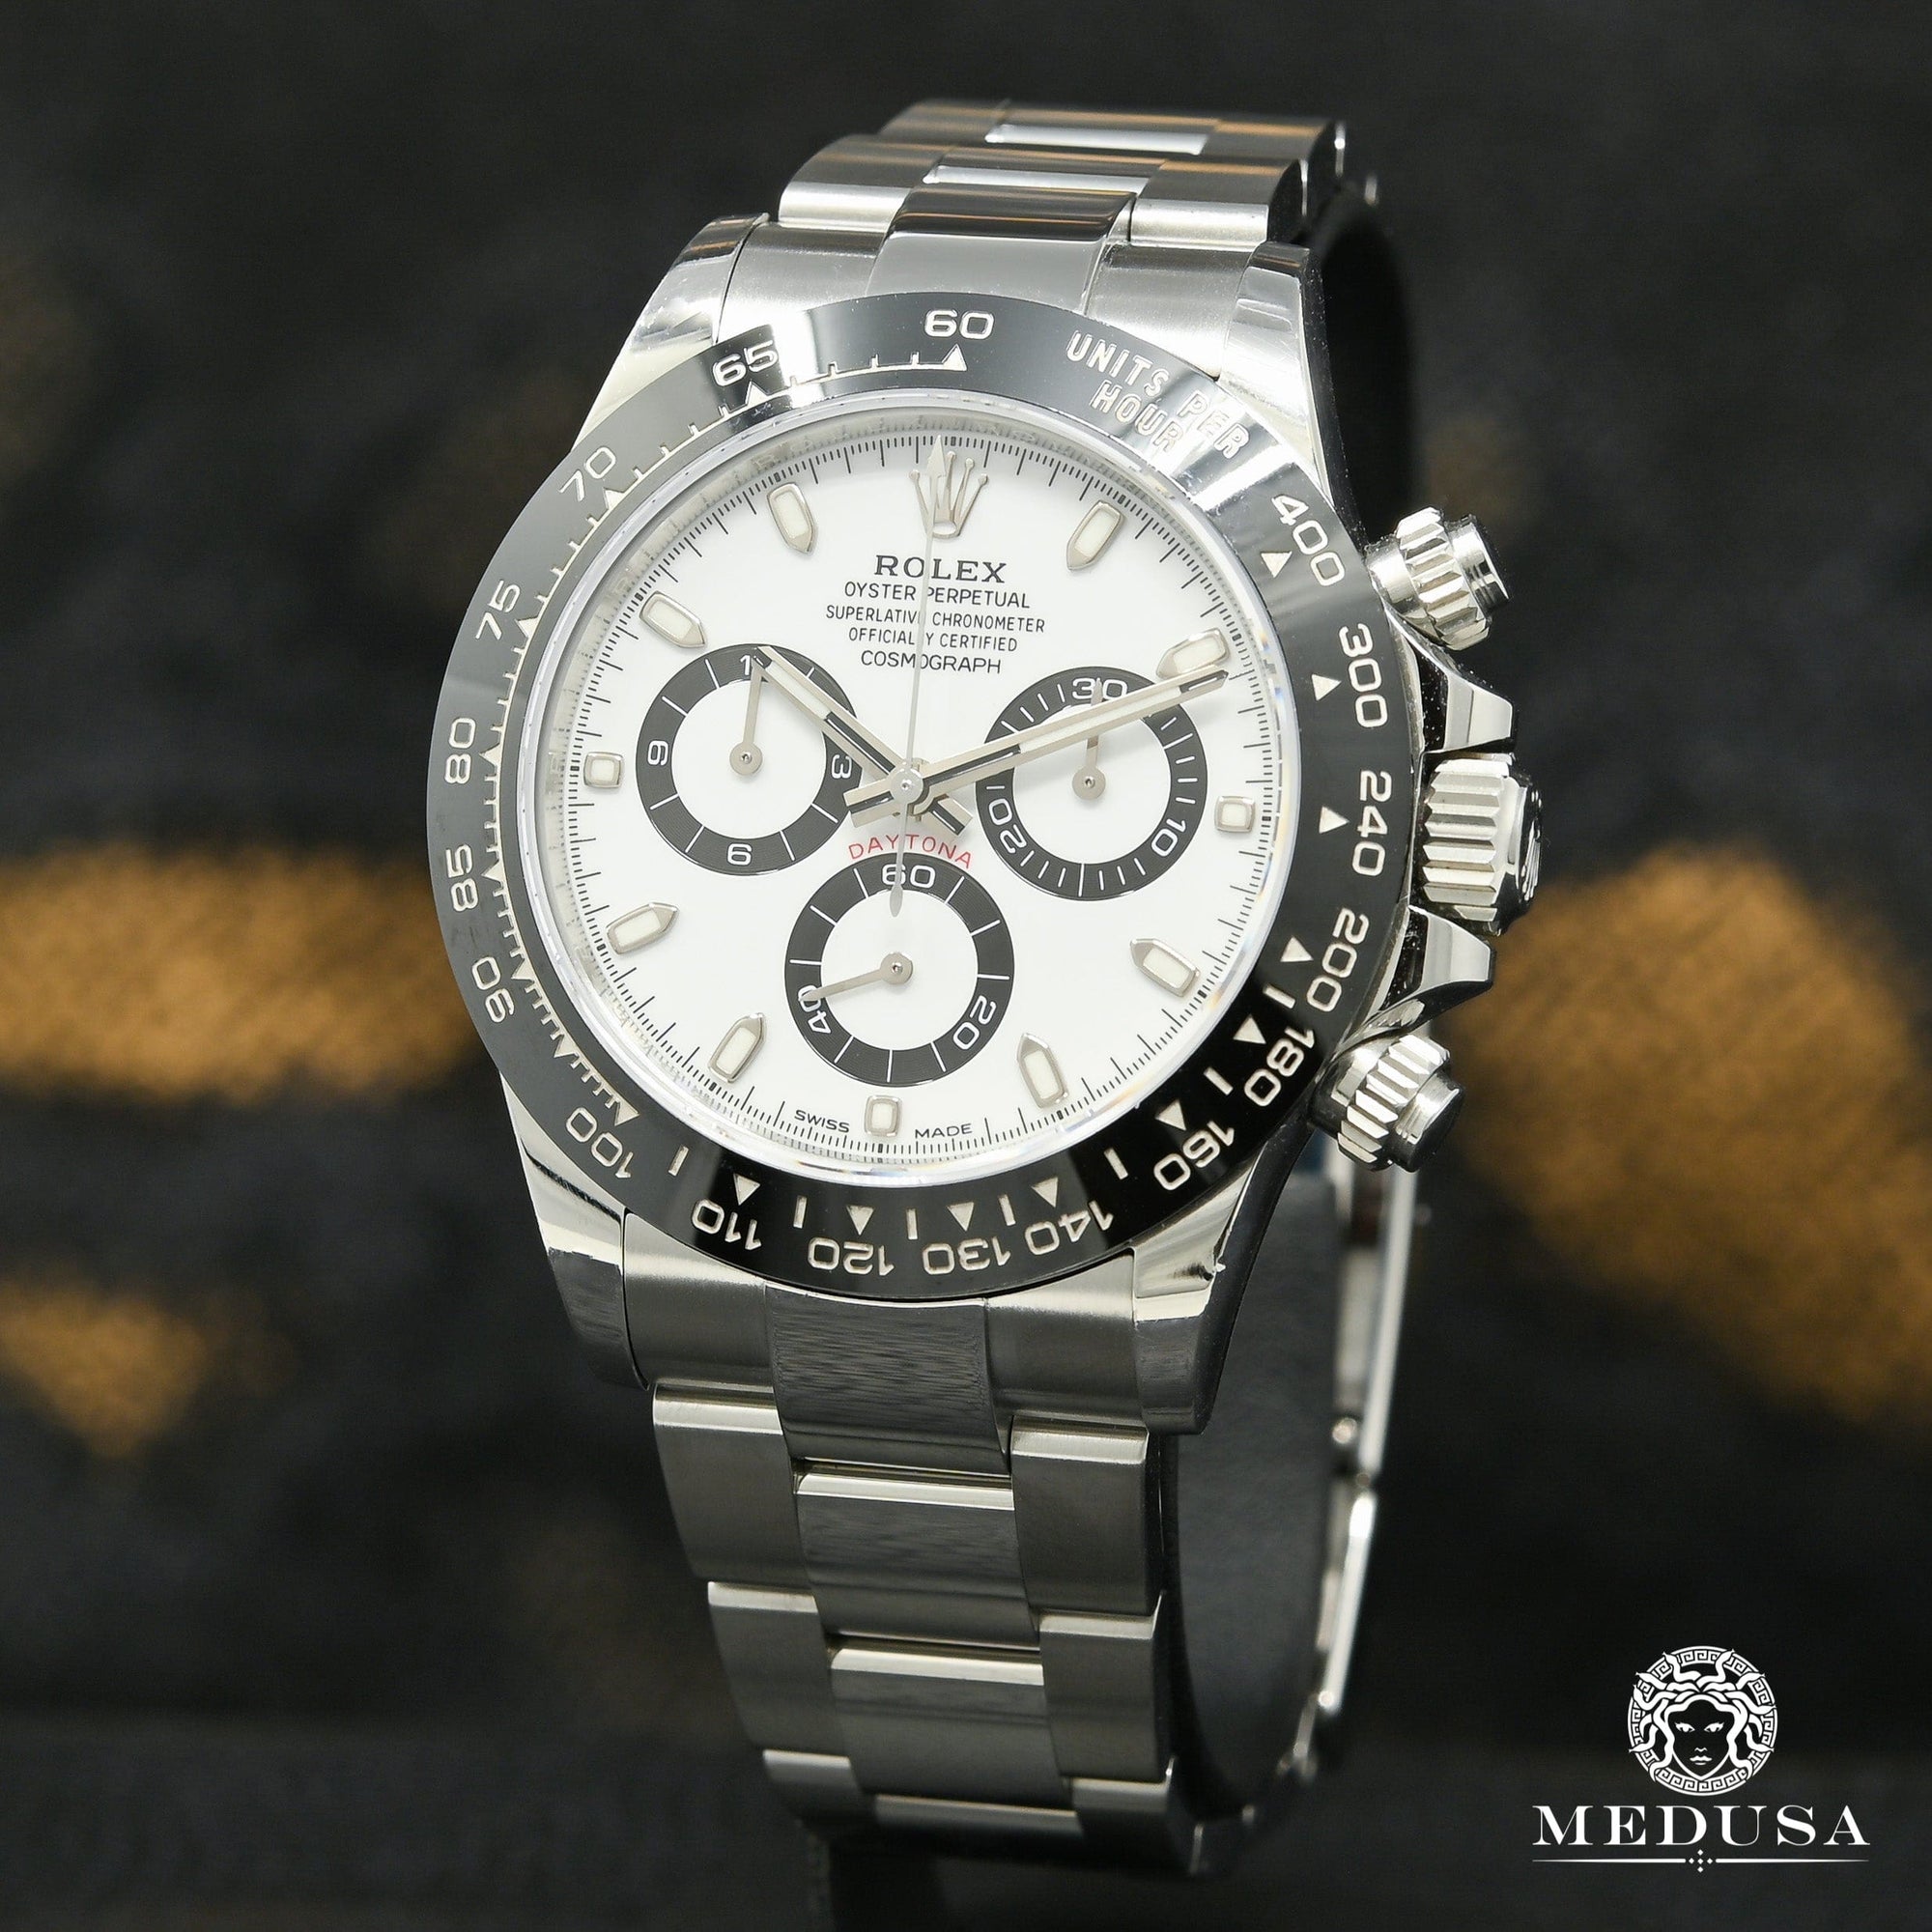 Rolex watch | Rolex Cosmograph Daytona 40mm Men's Watch - Panda Stainless